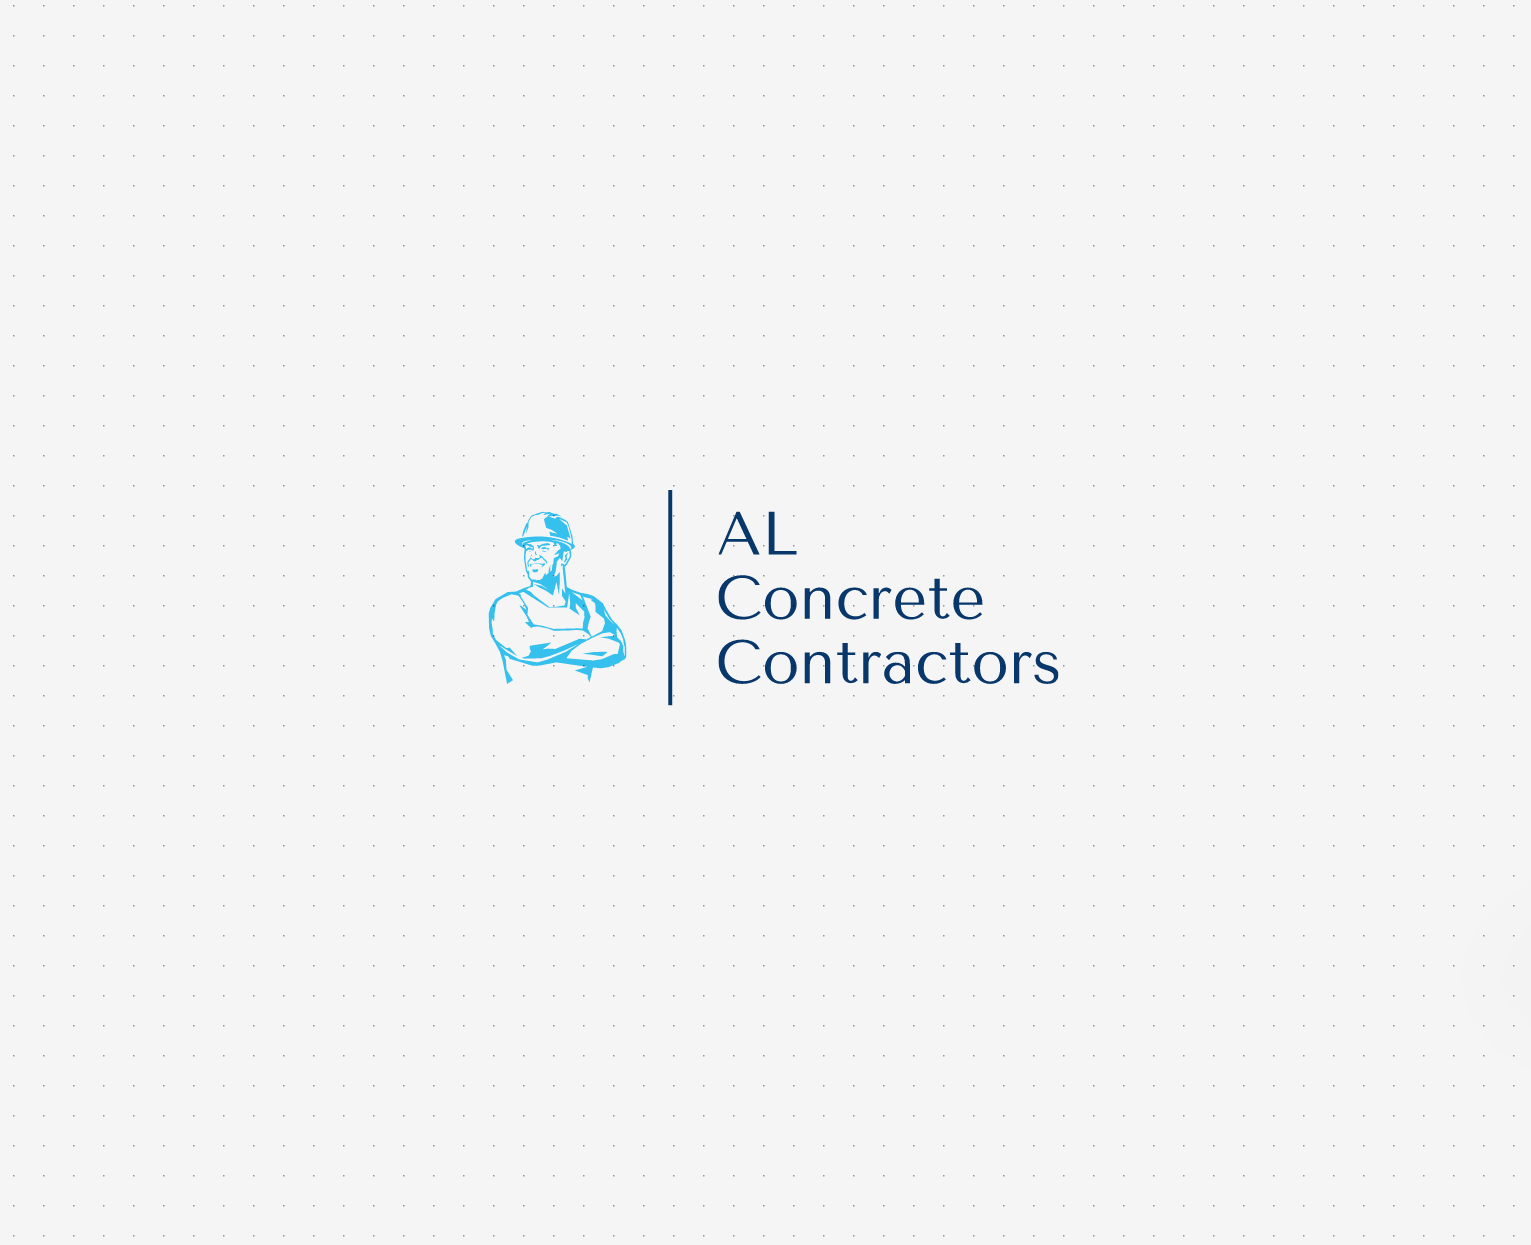 AL Concrete Contractors